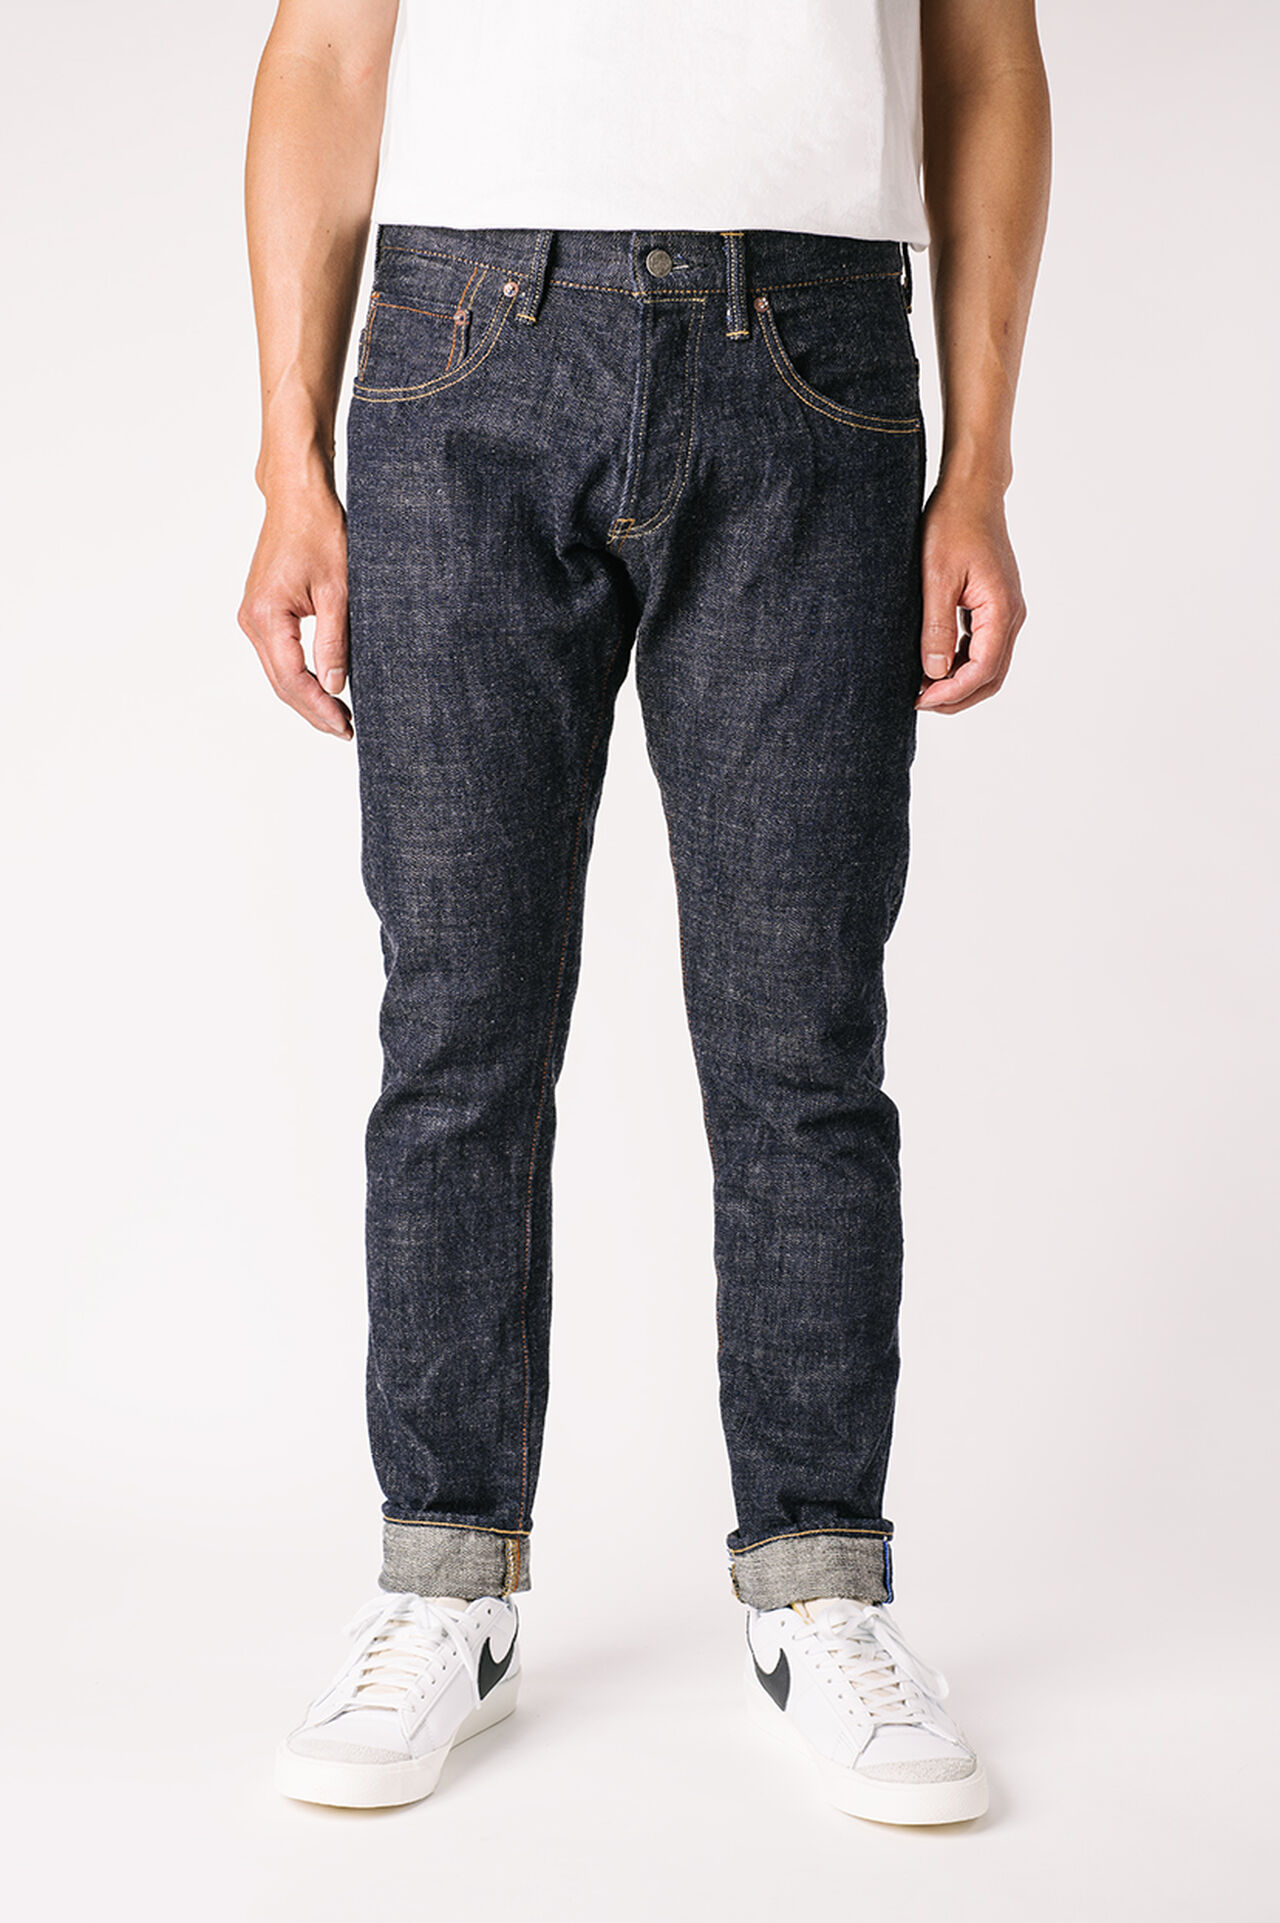 Buy 14oz "FUUMA" Selvedge Street Tapered Jeans for USD 285.00 | Tanuki